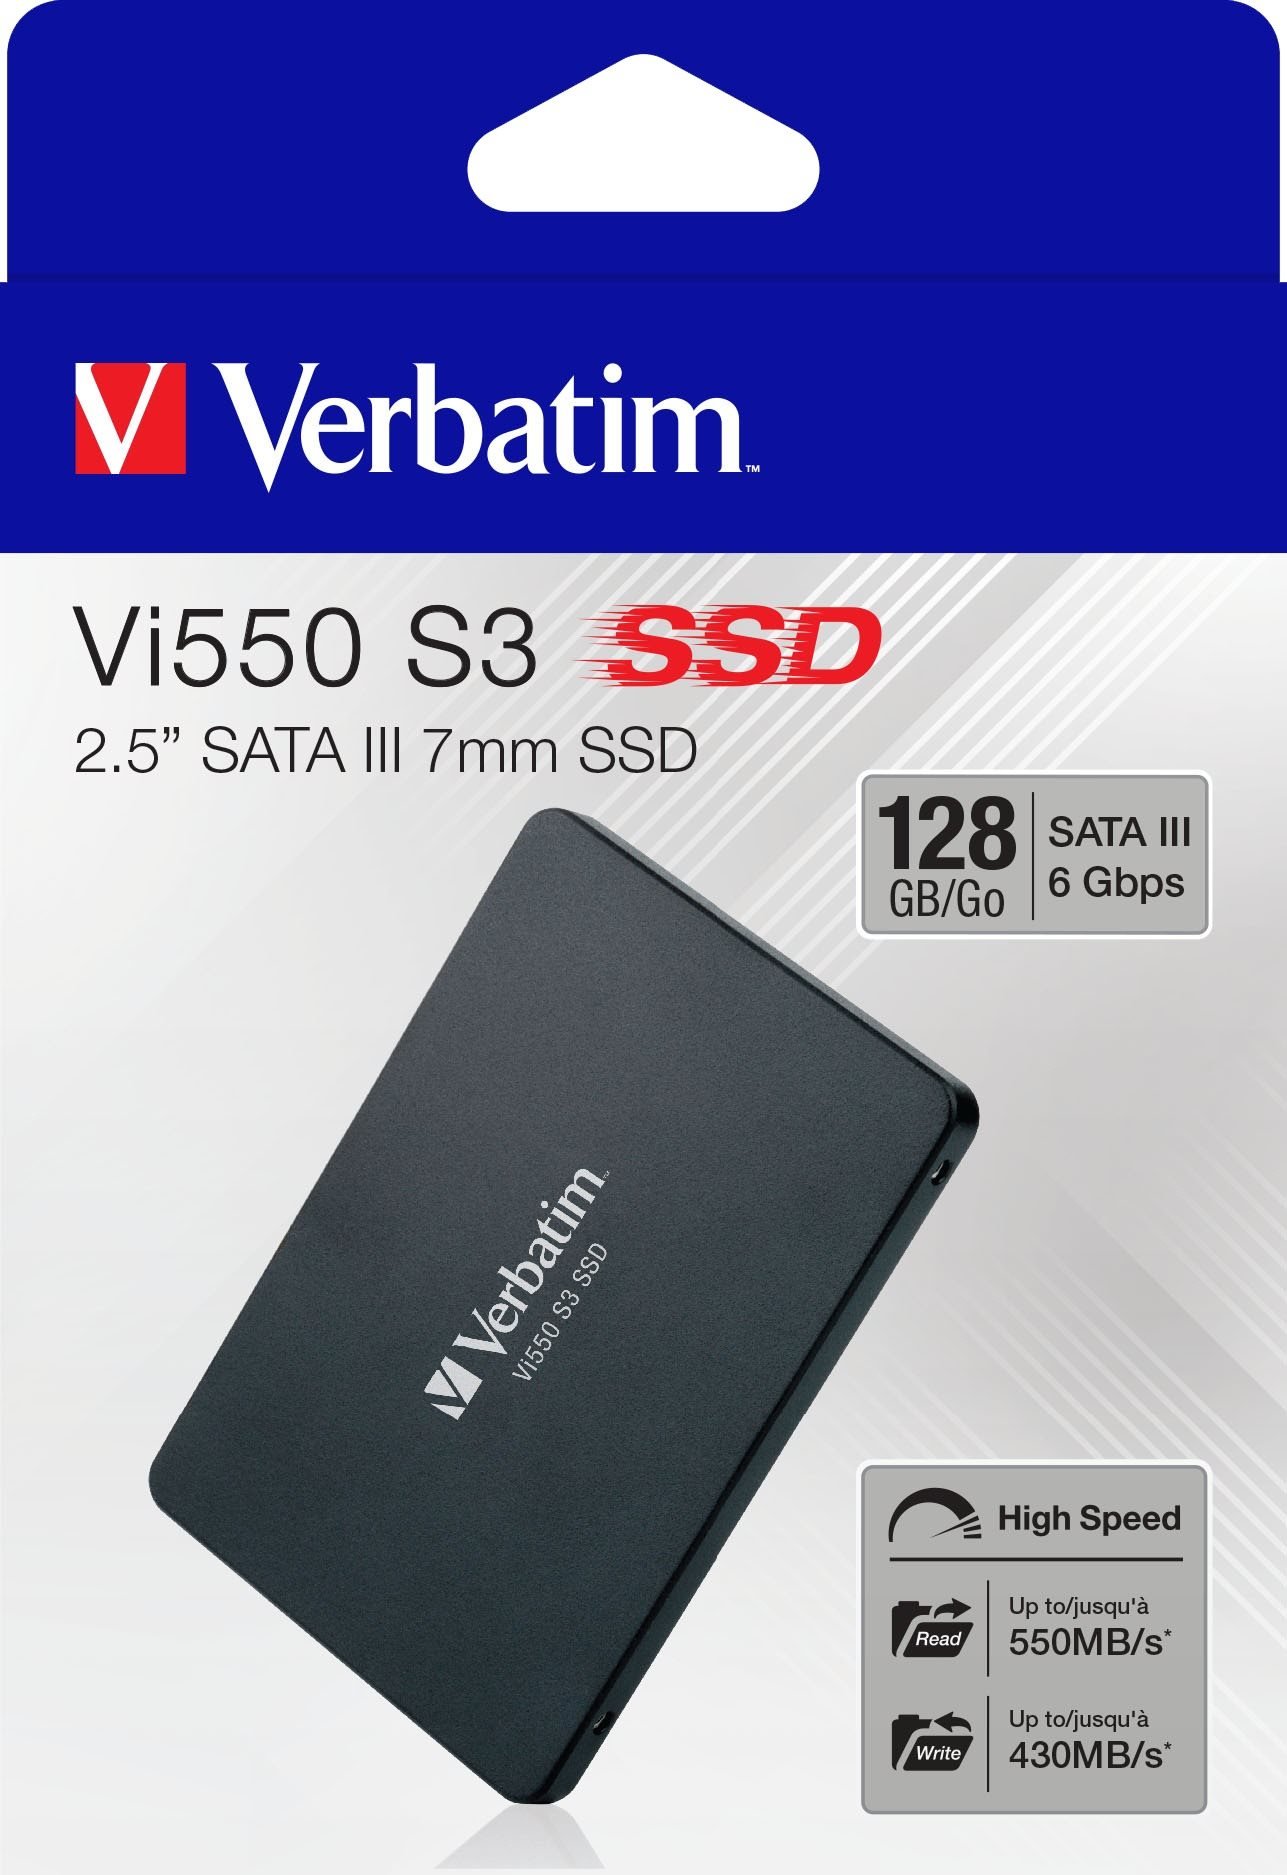 VerbatimVI550S32.5"SSD128GB